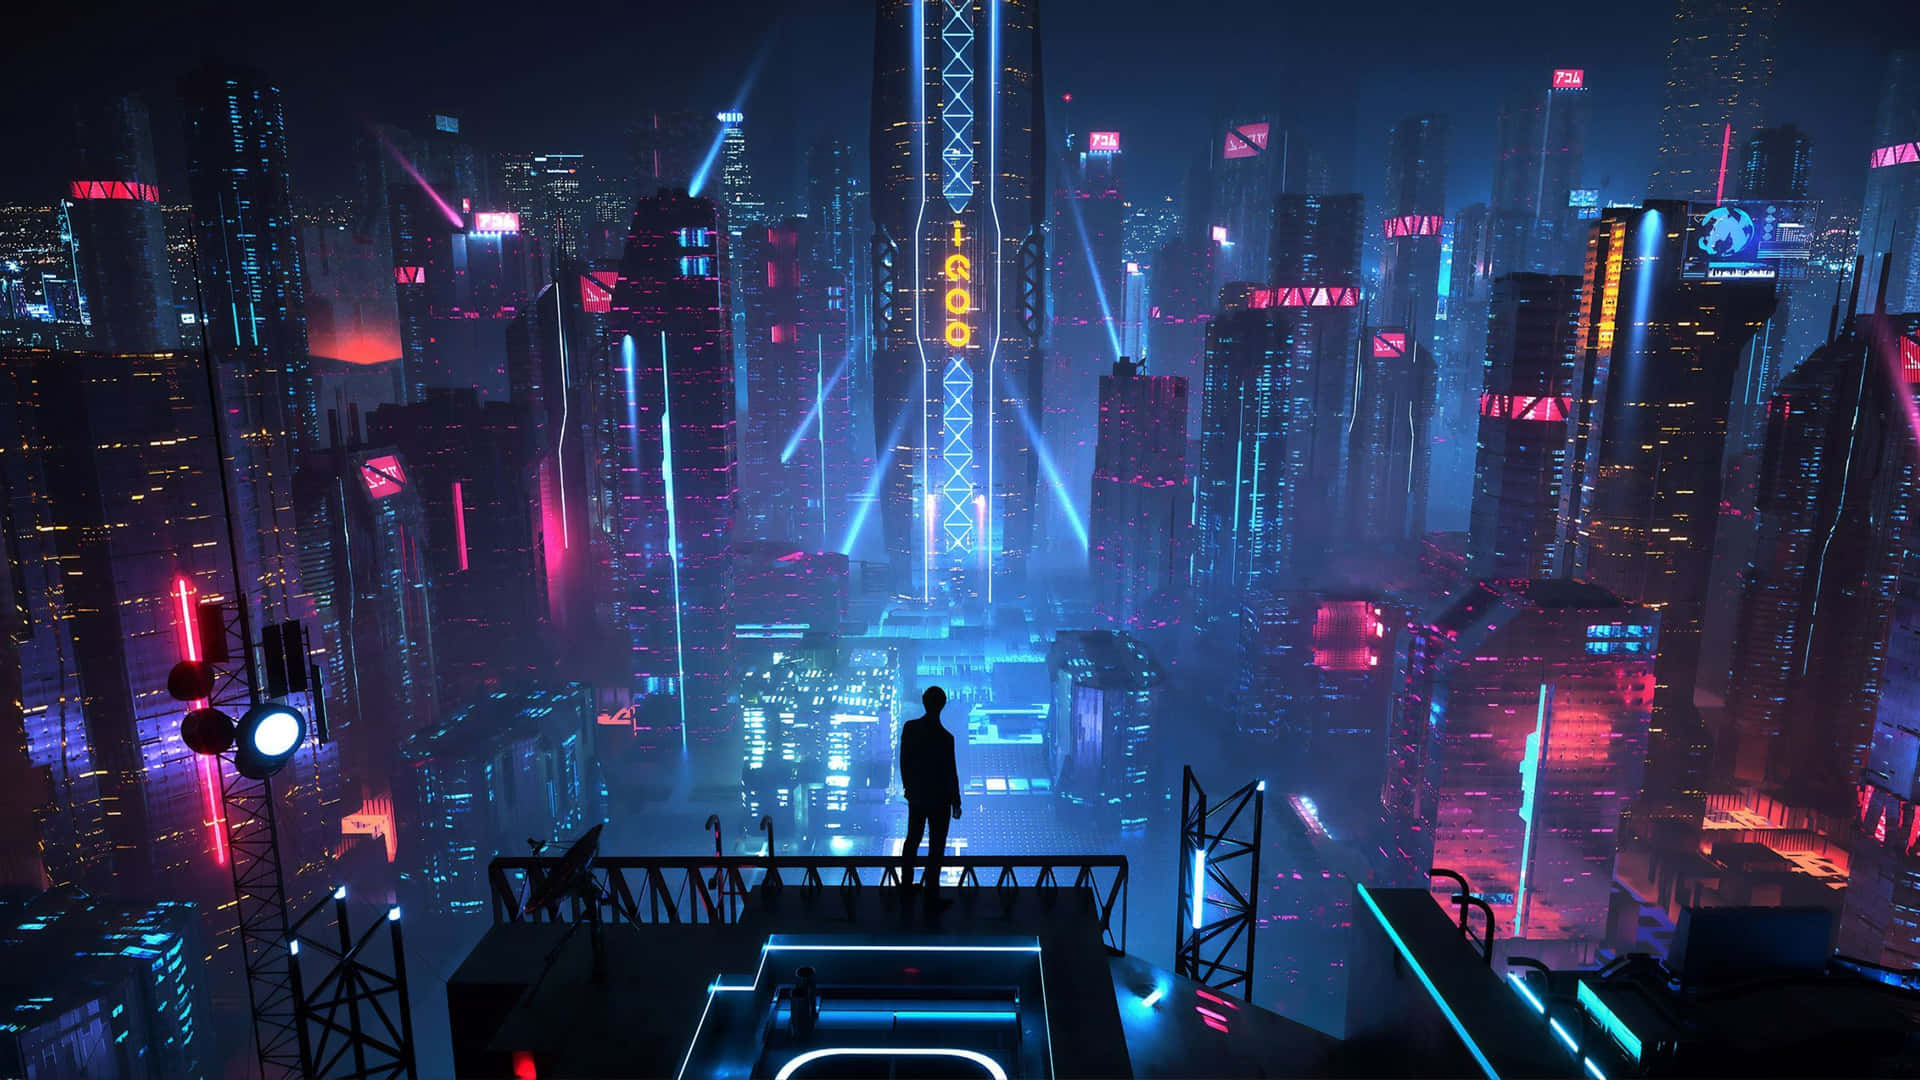 A Glowing Cyberpunk City